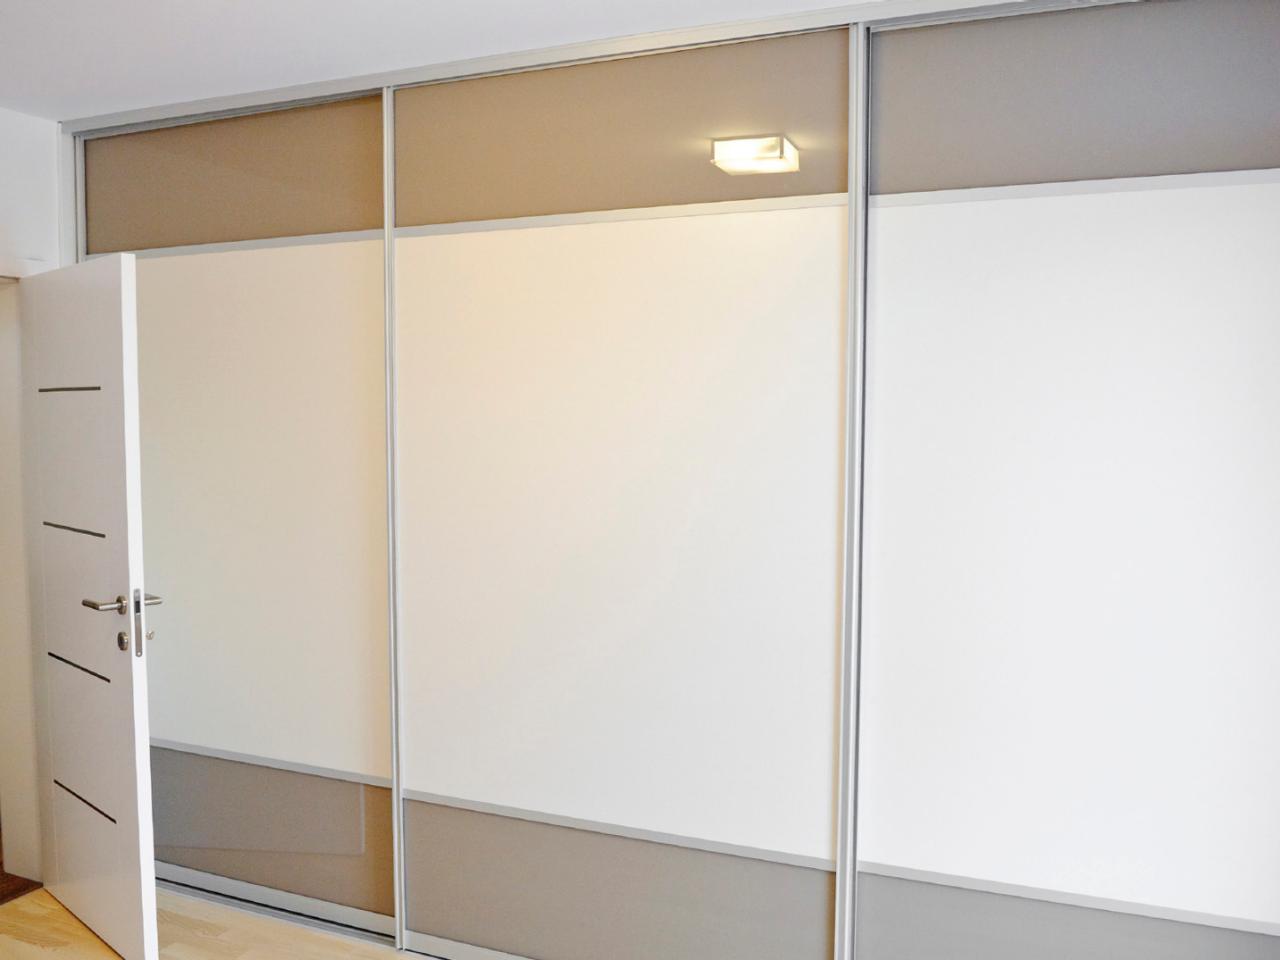 Pictures of Sliding Closet Doors: Design Ideas and Options closet sliding doors